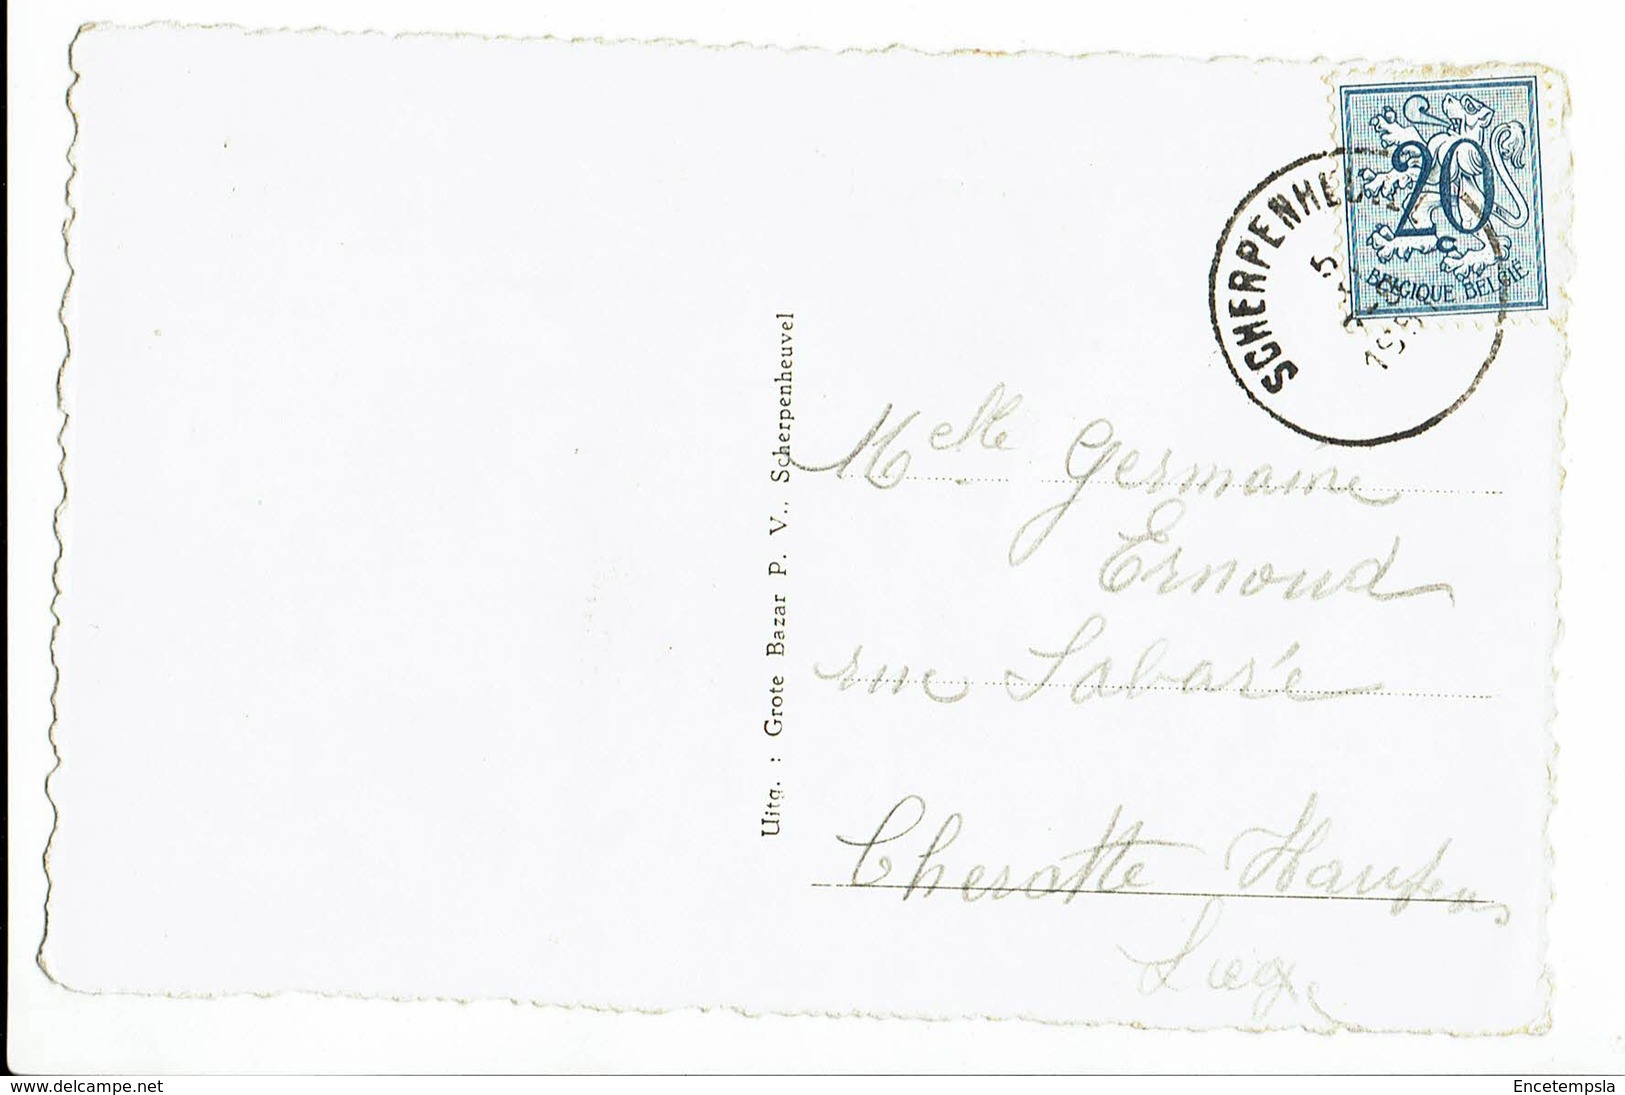 CPA - Carte Postale -Belgique -Scherpenheuvel - La Basilique-1950- S1667 - Scherpenheuvel-Zichem